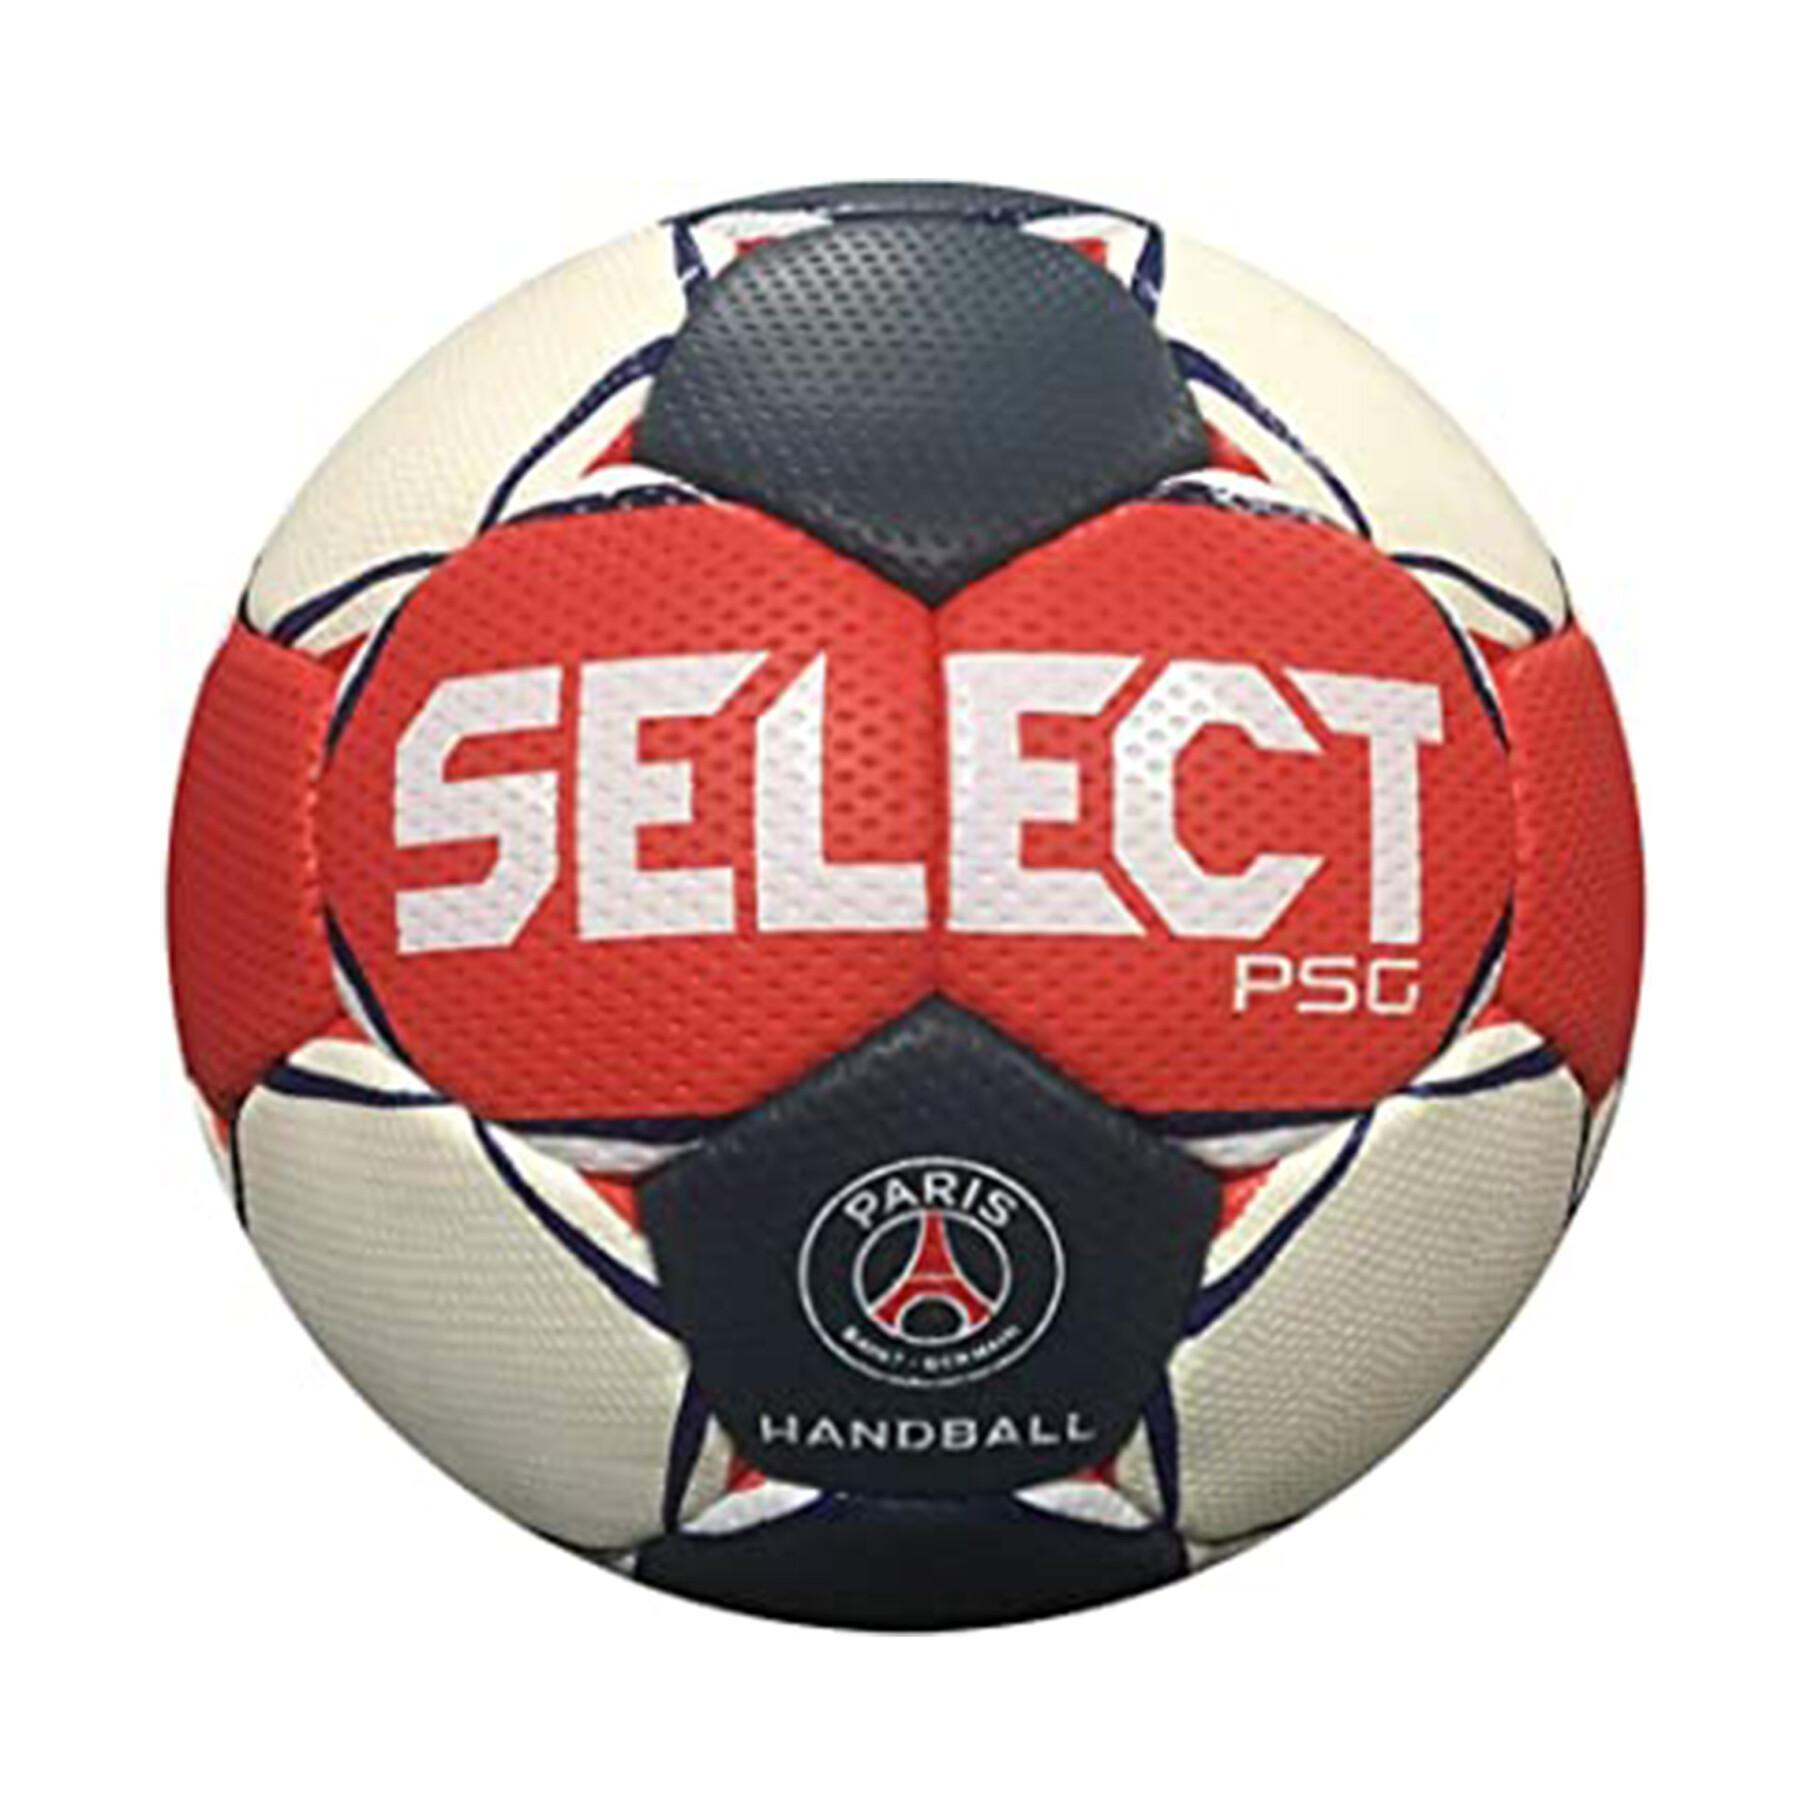 Pallone da pallamano Select MB PSG 2020/21